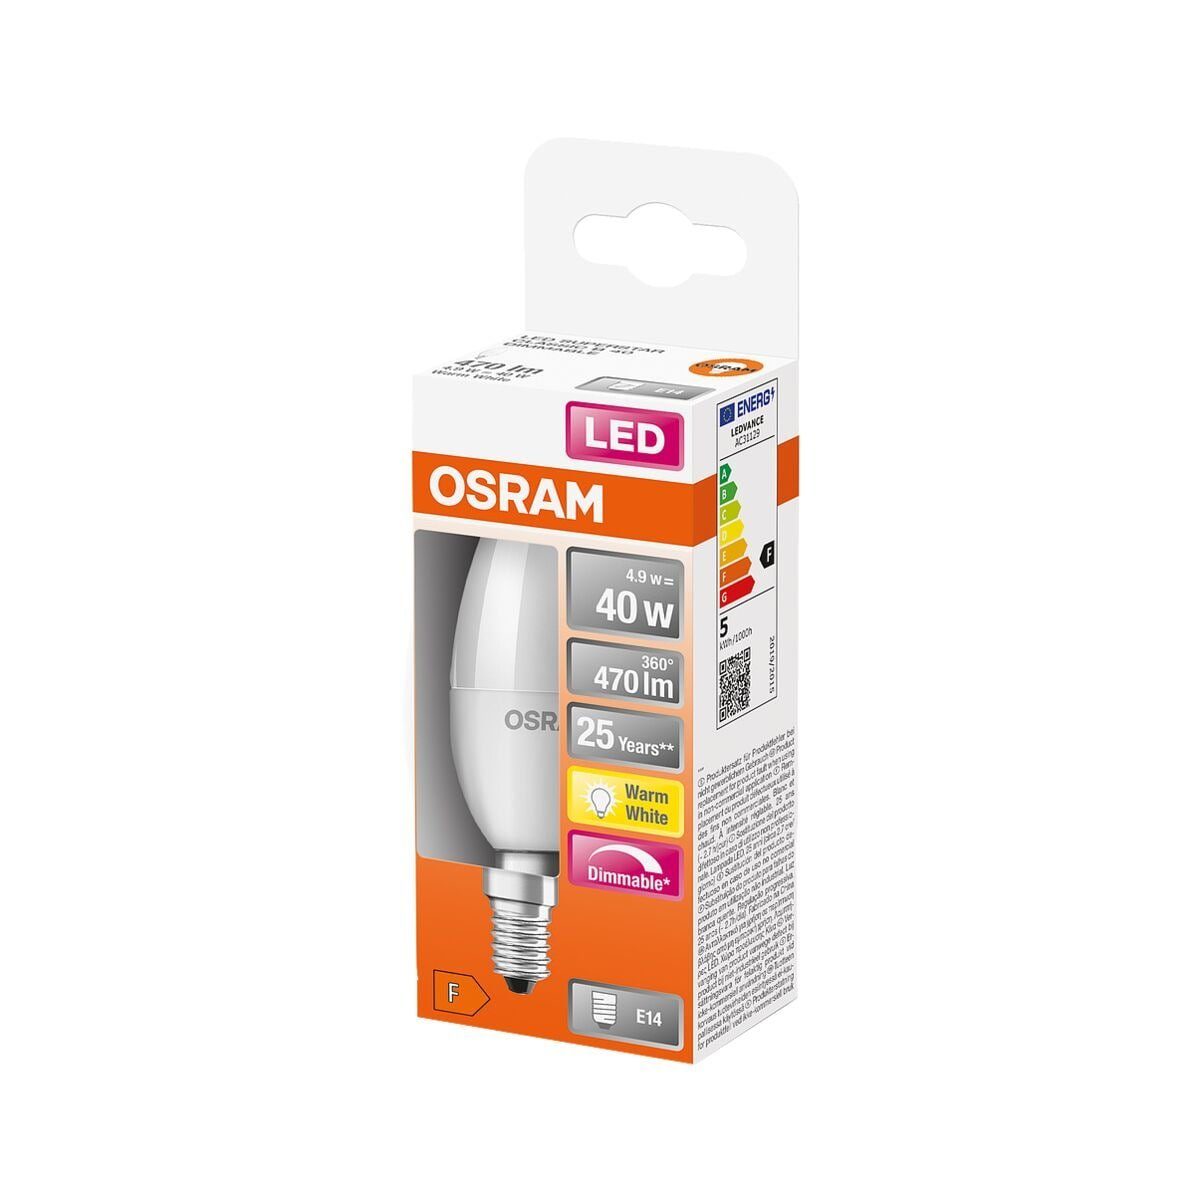 Osram LED-Leuchtmittel White, B E14, Superstar 5 W dimmbar, Classic Warm